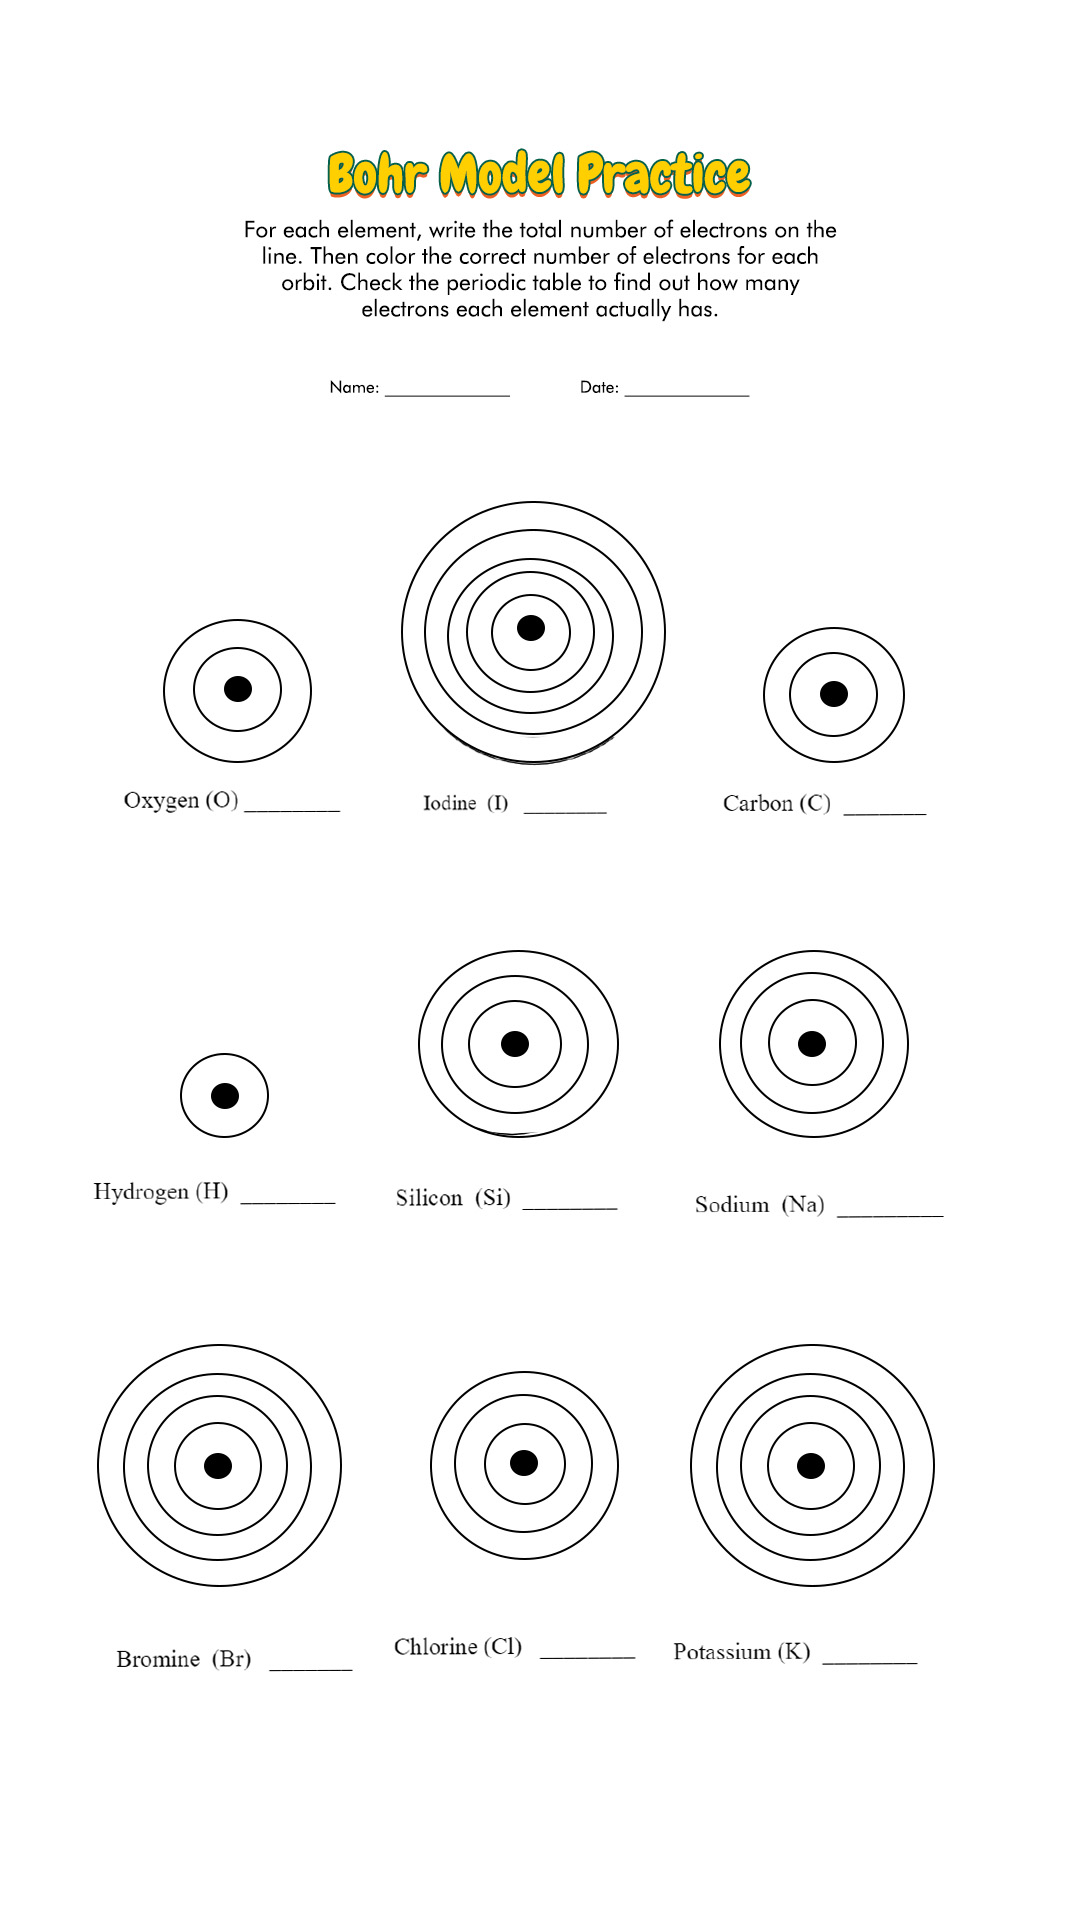 Blank Bohr Model Worksheet Image